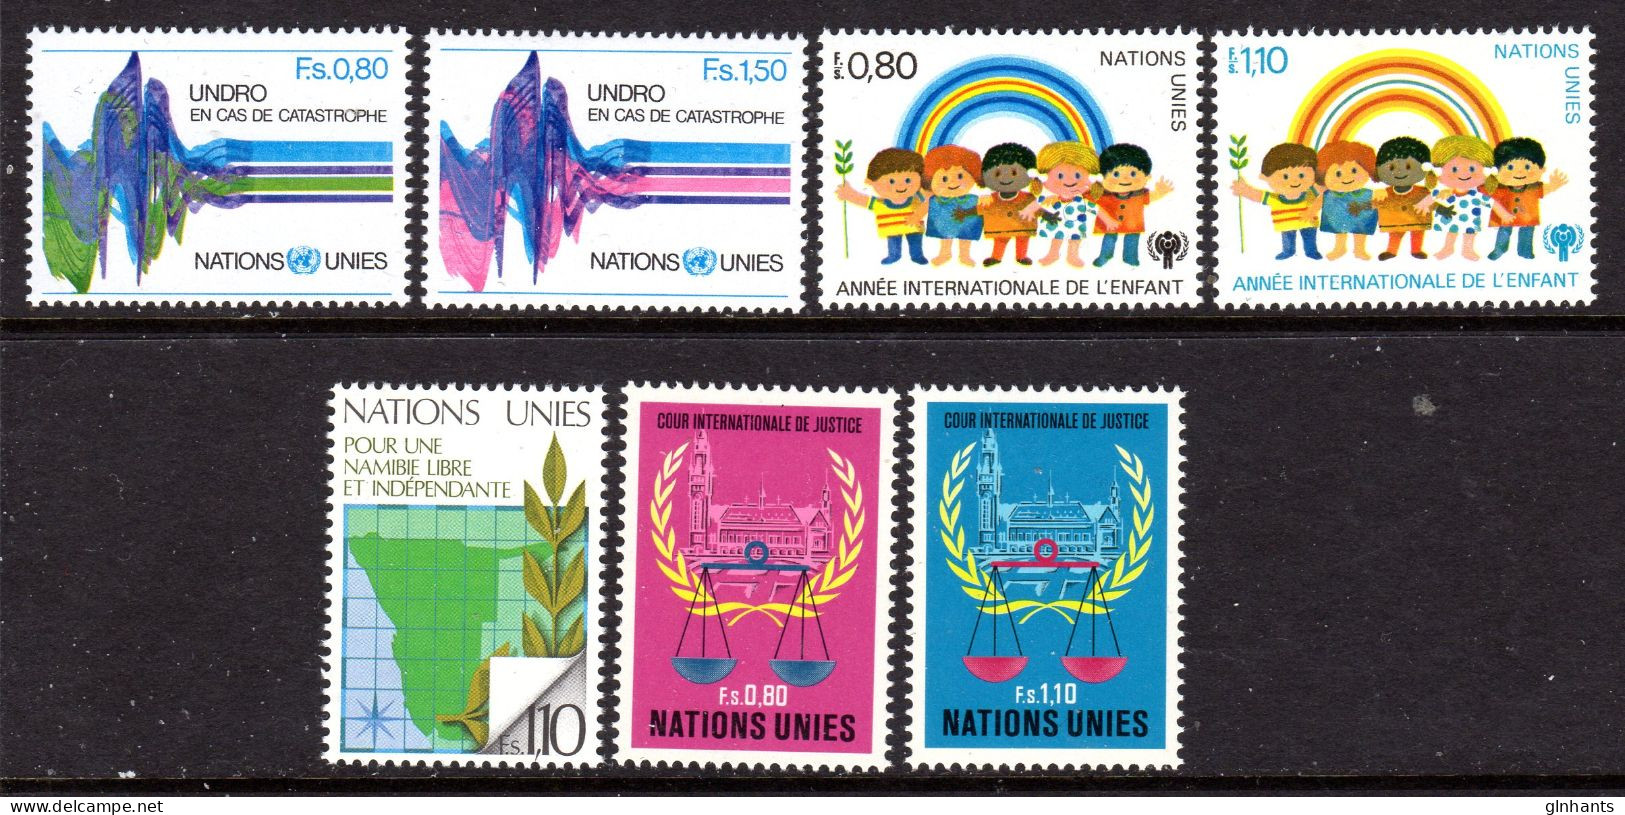 UNITED NATIONS UN GENEVA - 1979 COMPLETE YEAR SET (7V) AS PICTURED FINE MNH ** SG G82-G88 - Ongebruikt